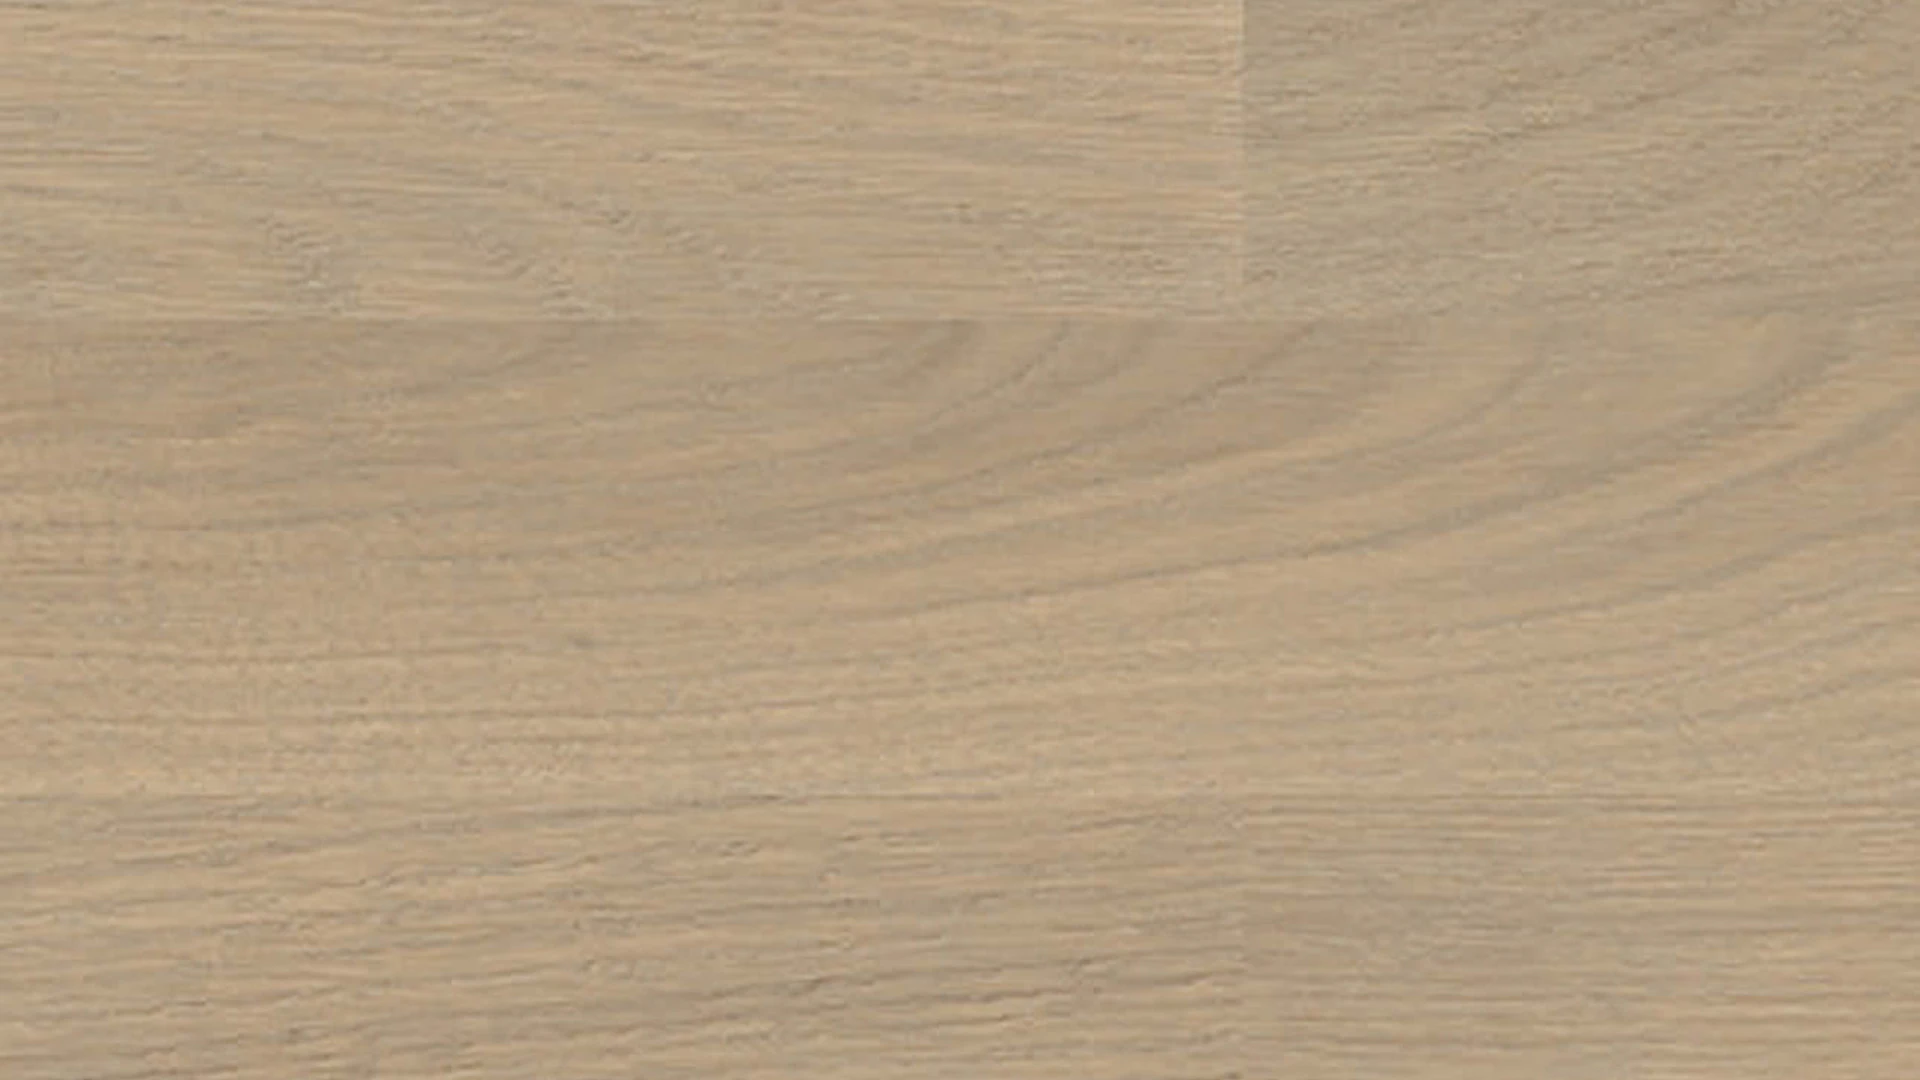 Haro Parquet Flooring - Series 4000 Stab Allegro naturaLin plus Oak sand gray Trend (540136)